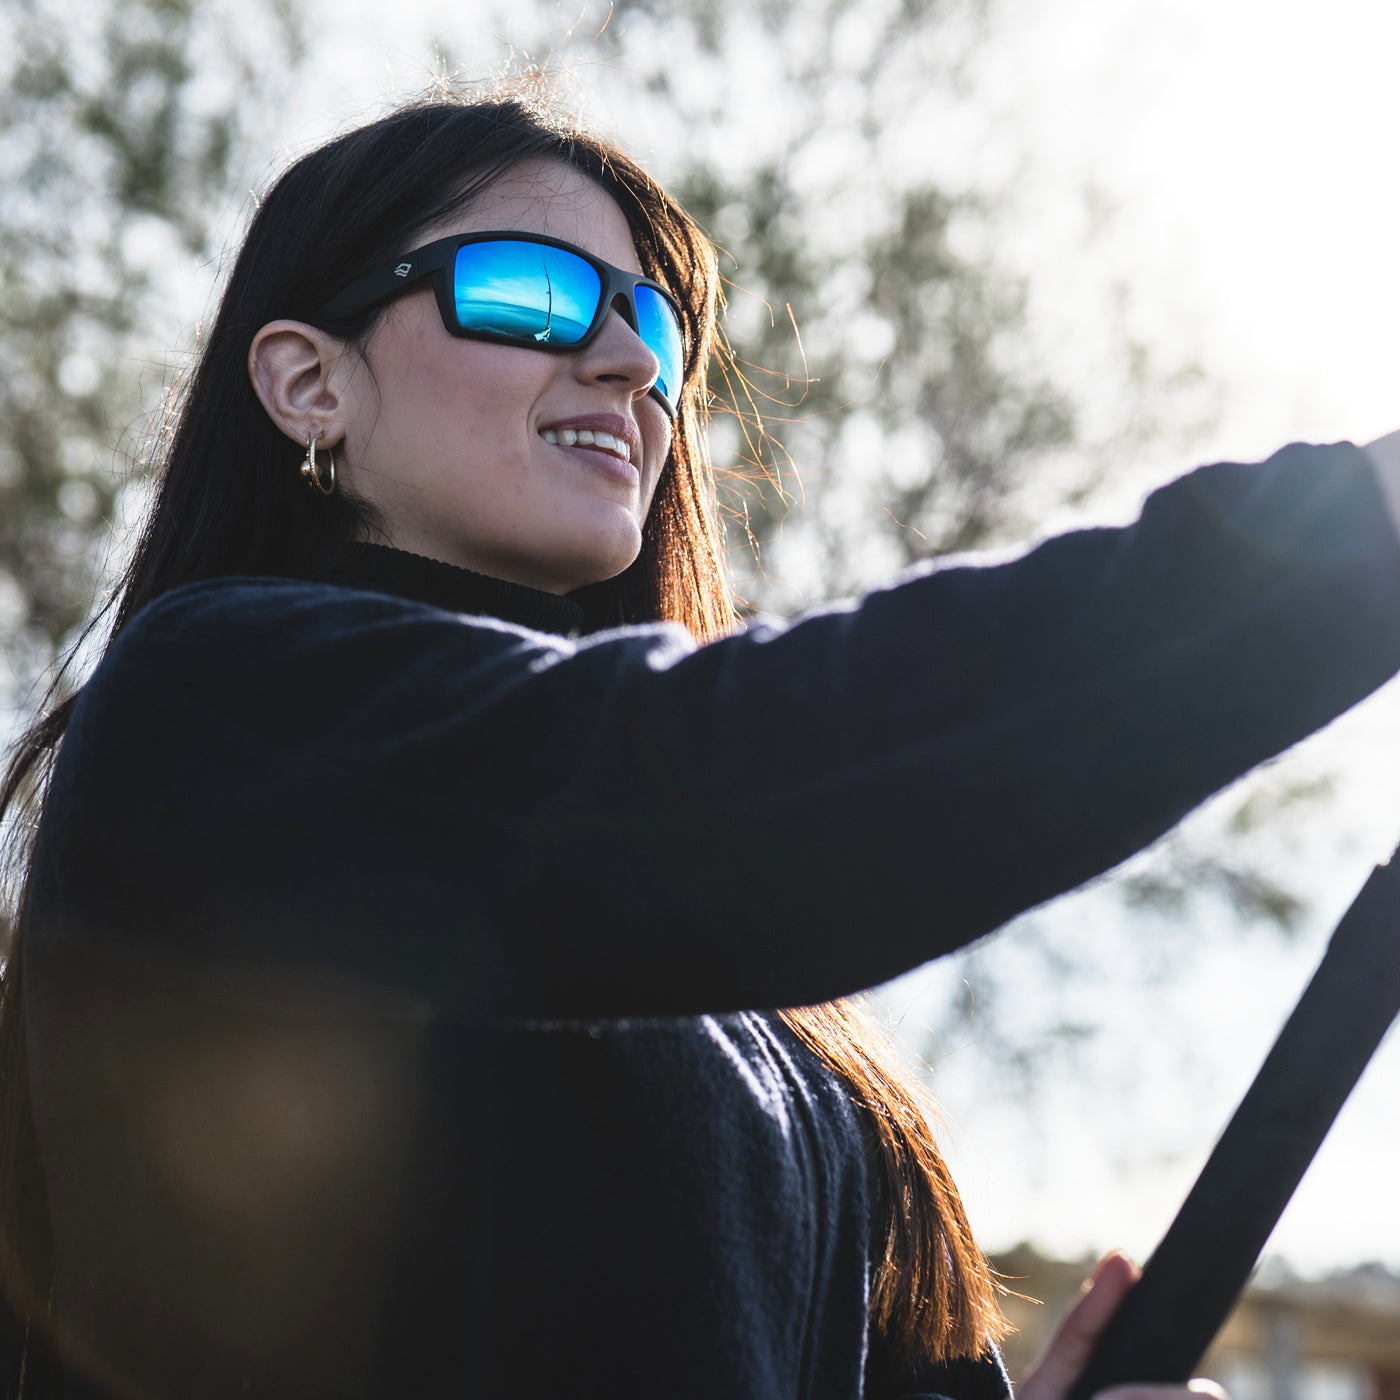 Купить Коврики  TOREGE Polarized Sports Sunglasses for Men and Women  Cycling Running Golf Fishing Sunglasses TR26